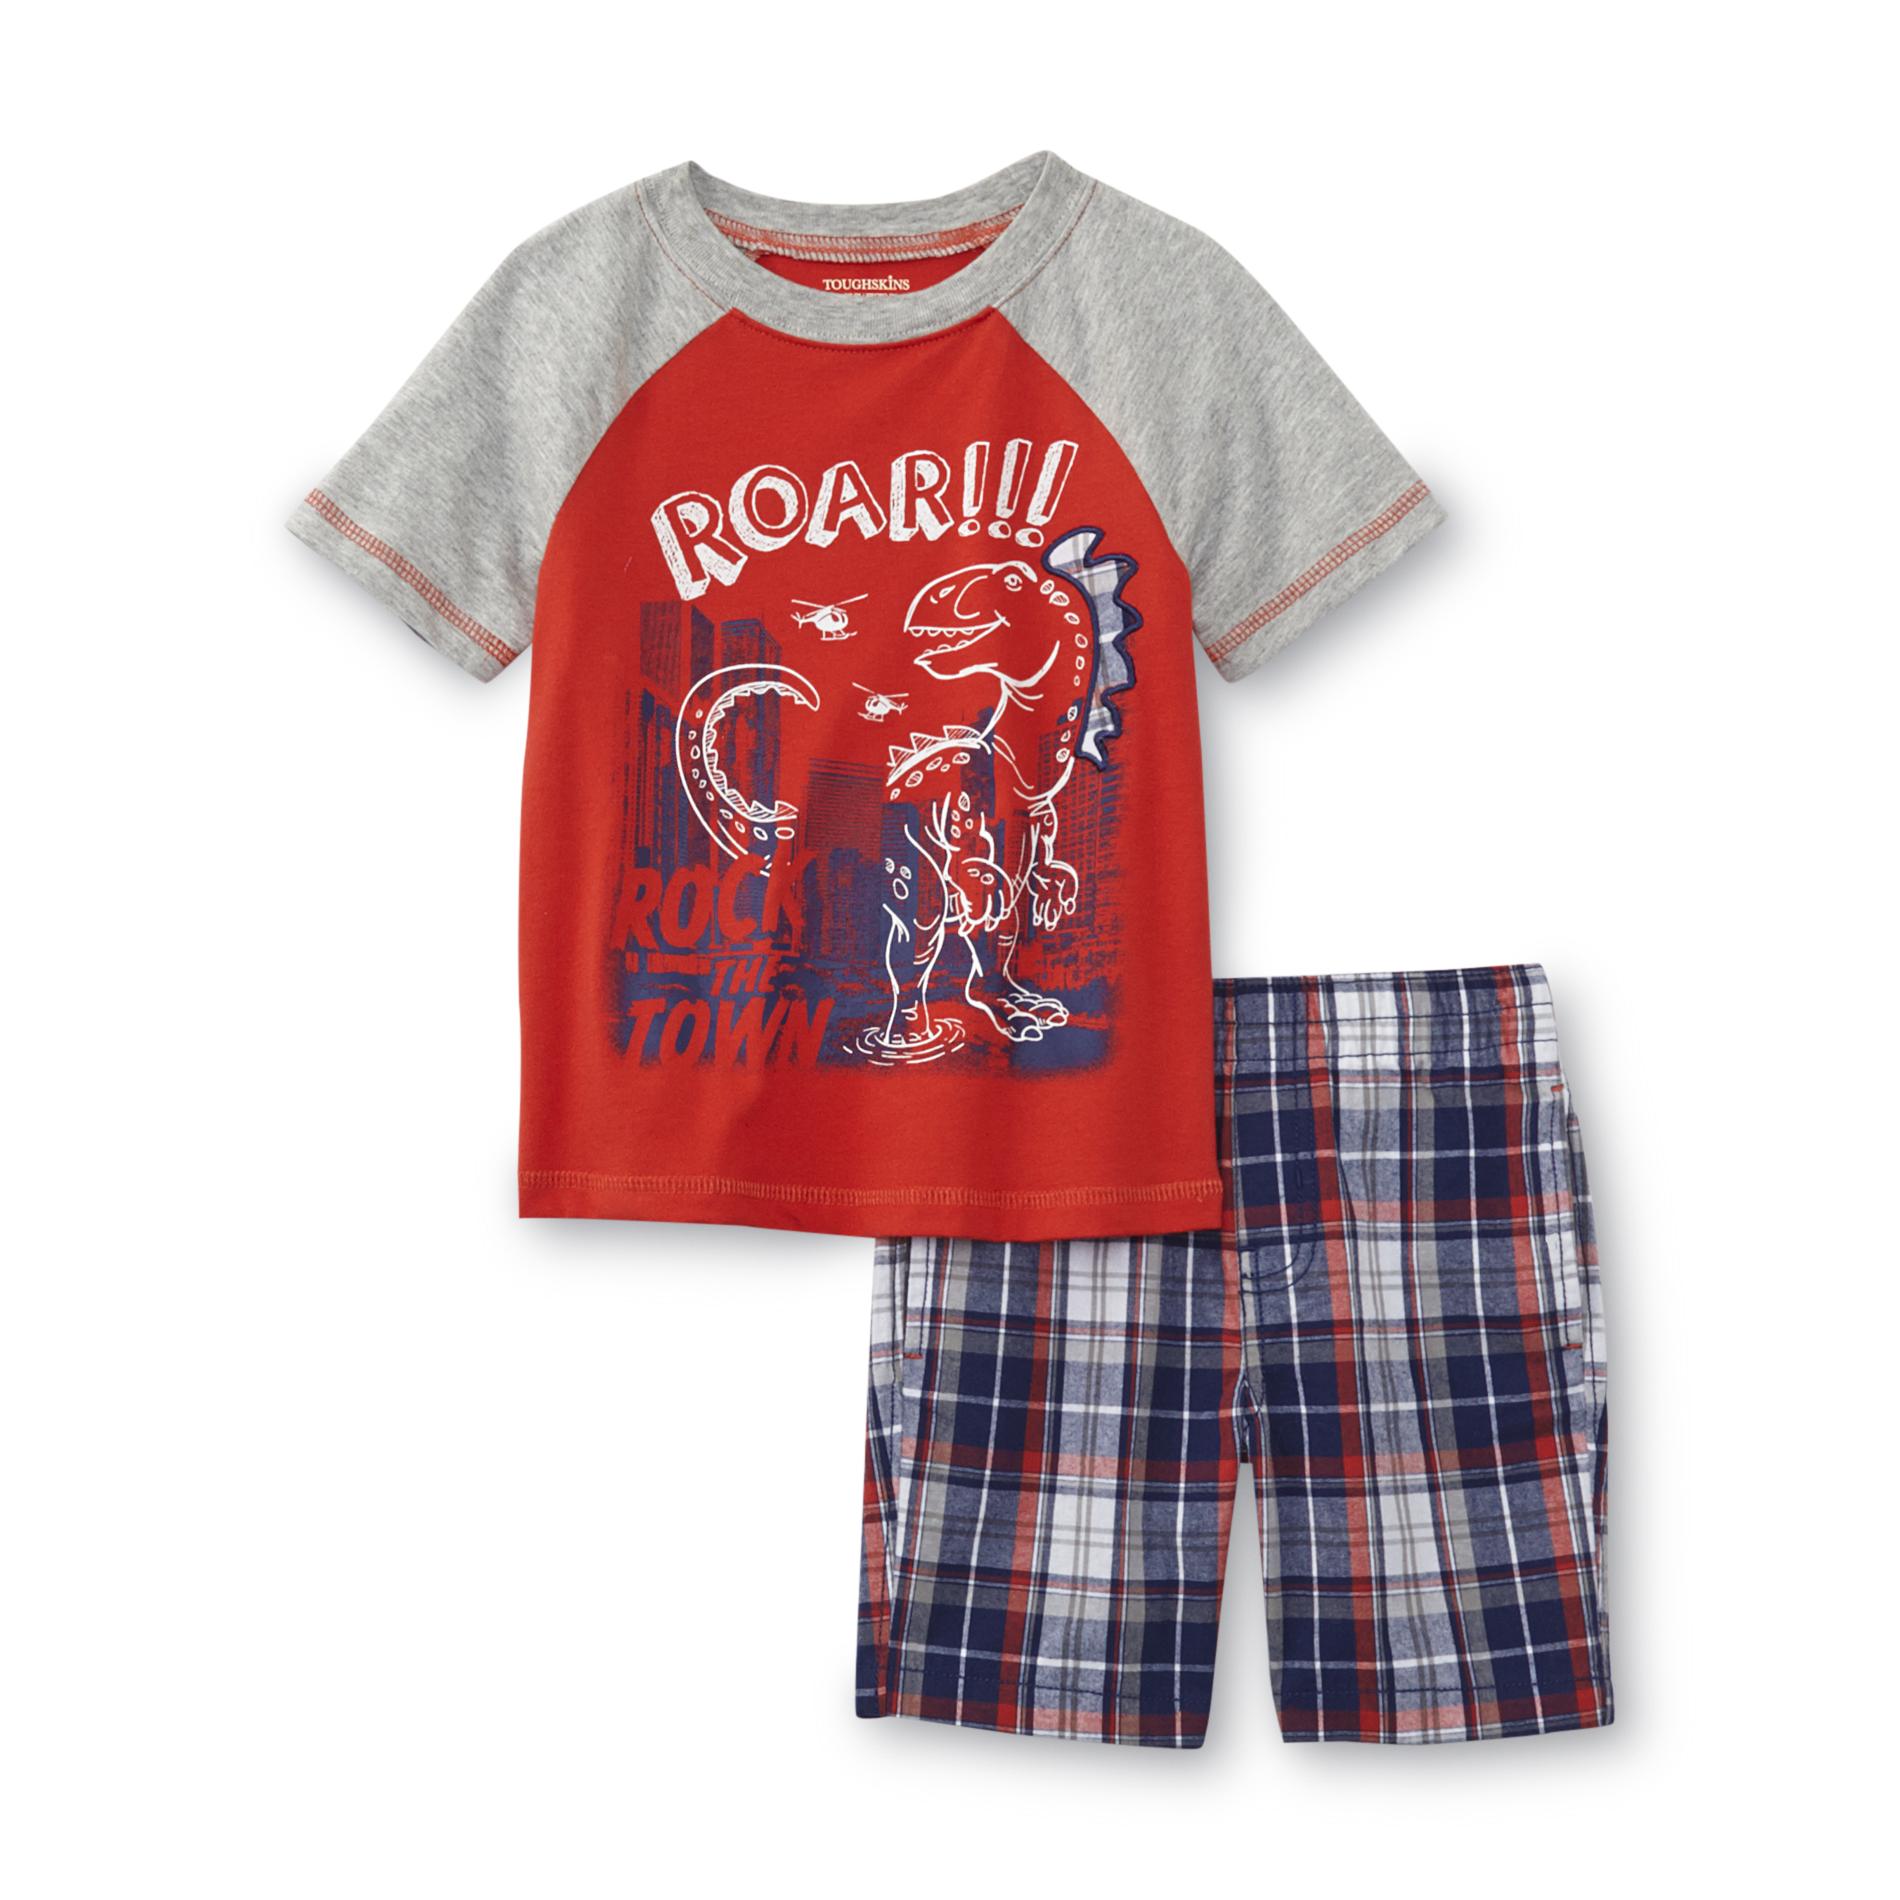 Toughskins Infant & Toddler Boy's Graphic T-Shirt & Shorts - Dinosaur & Plaid